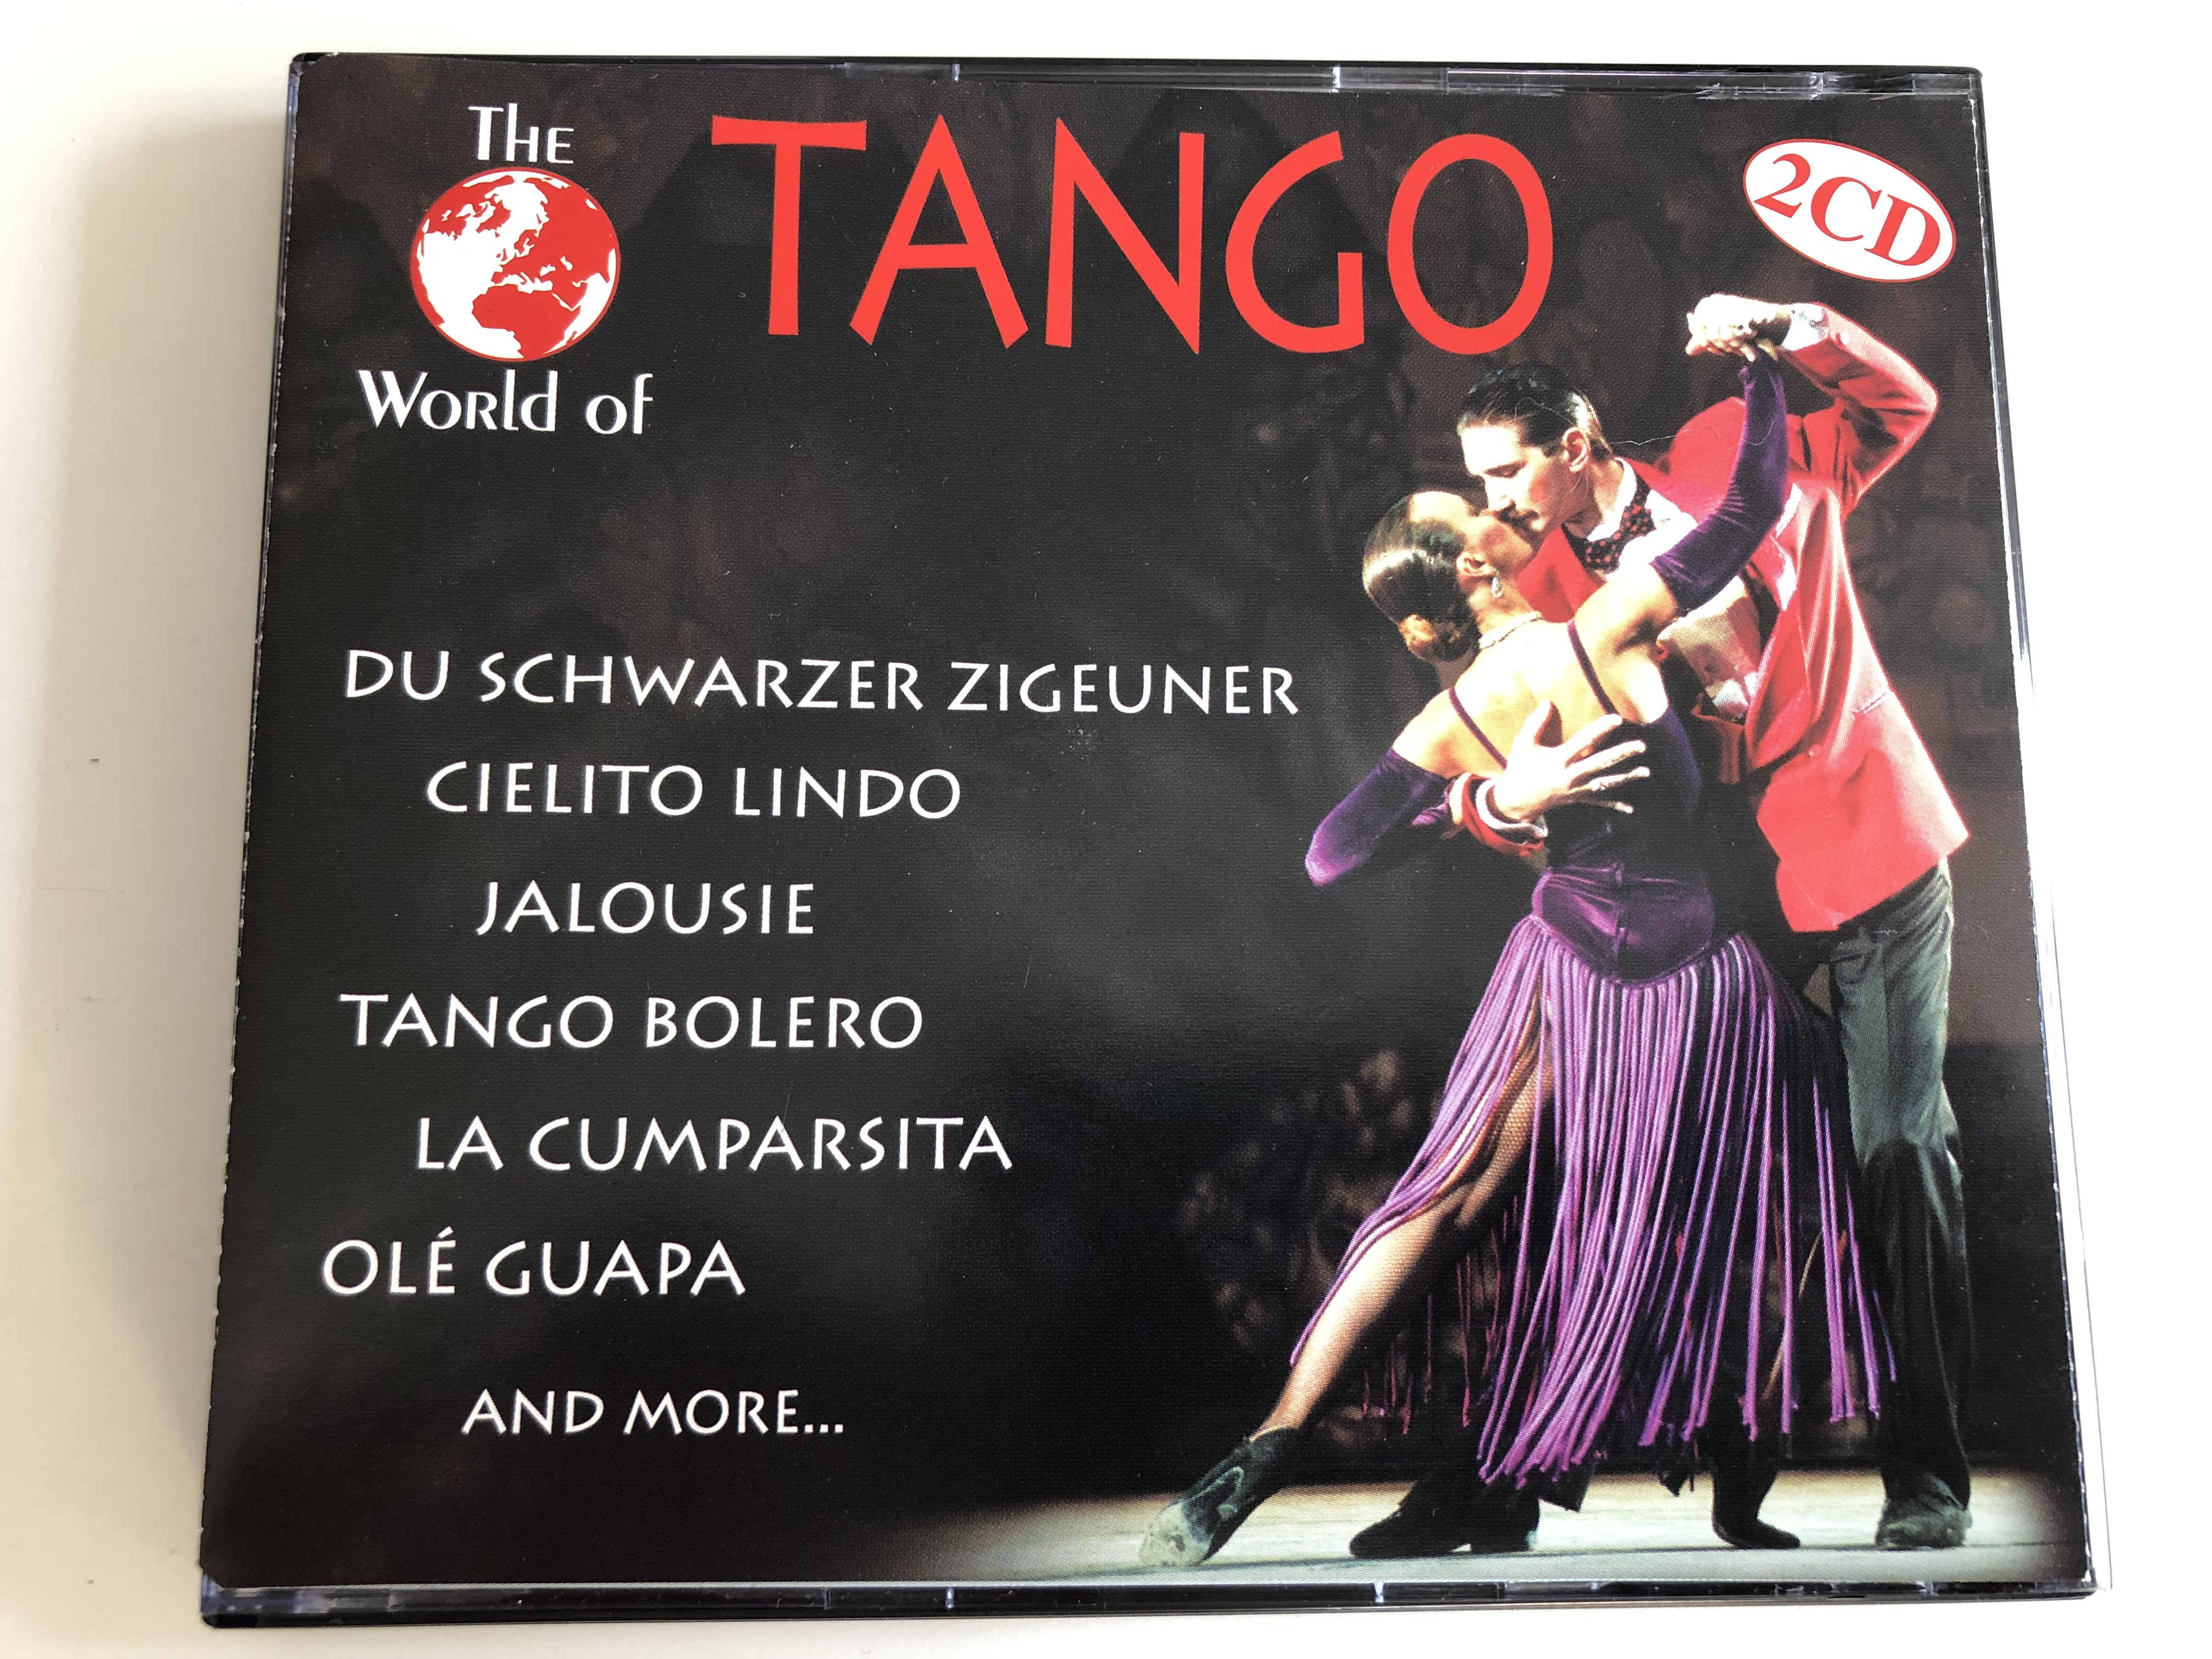 -the-world-of-tango-du-schwarzer-zieuner-cielito-lindo-jalousie-tango-bolero-la-cumparsita-ol-guapa-and-more...-zyx-music-2-cd-audio-cd-1996-1-.jpg